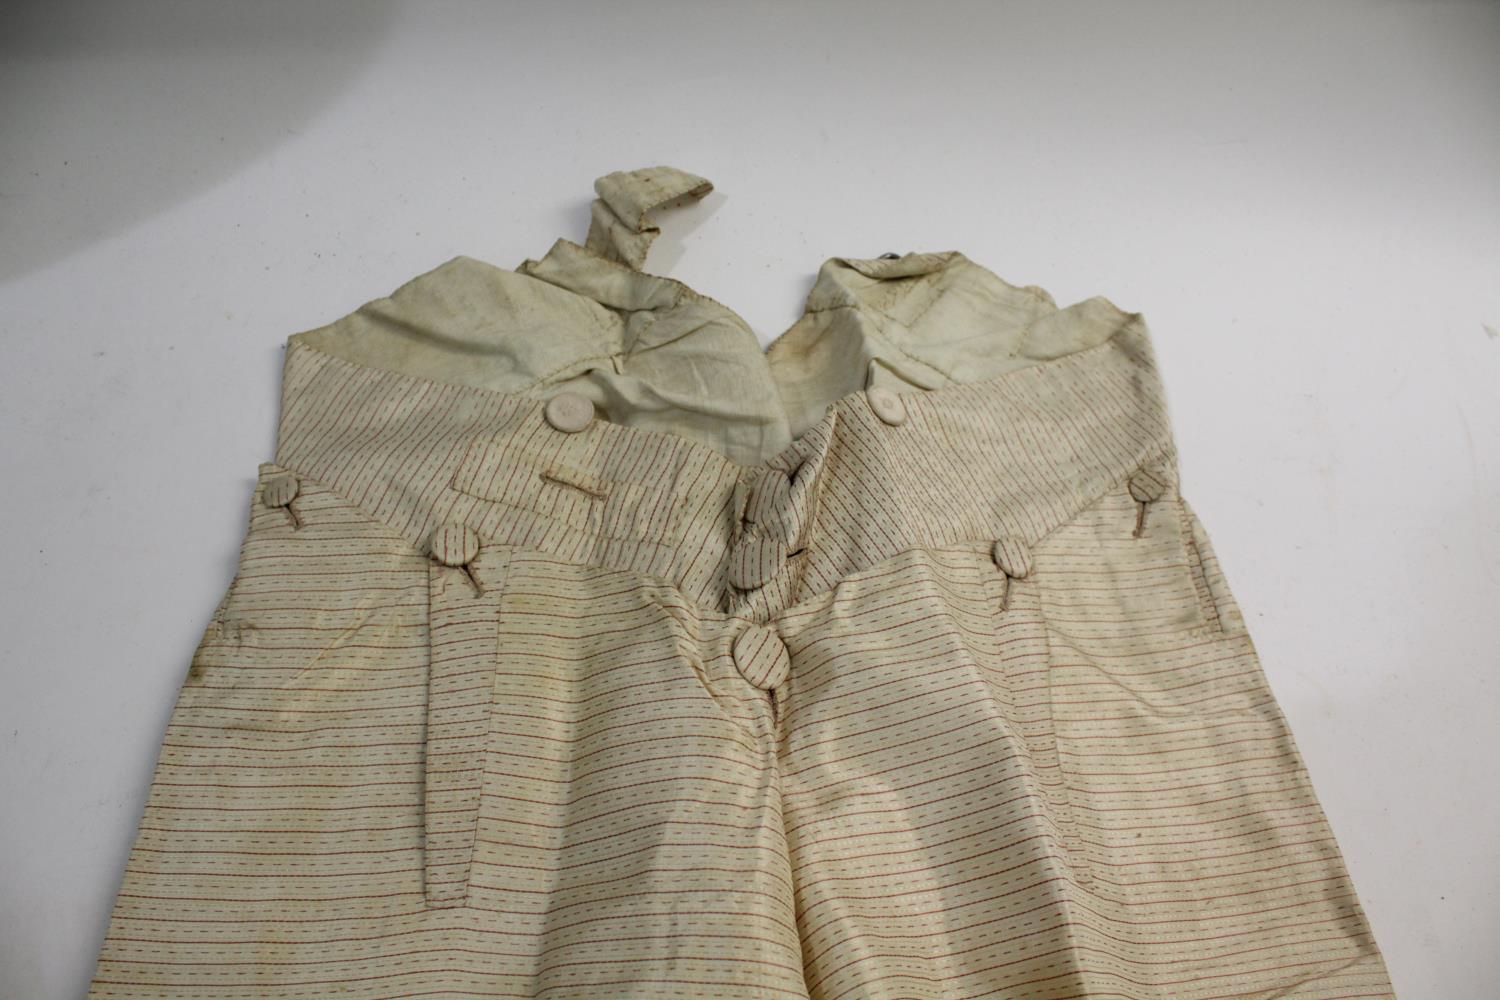 EARLY 19THC SILK COURT BREECHES circa 1825, a pair of silk breeches worn by Sir Robert Burton of - Image 3 of 5